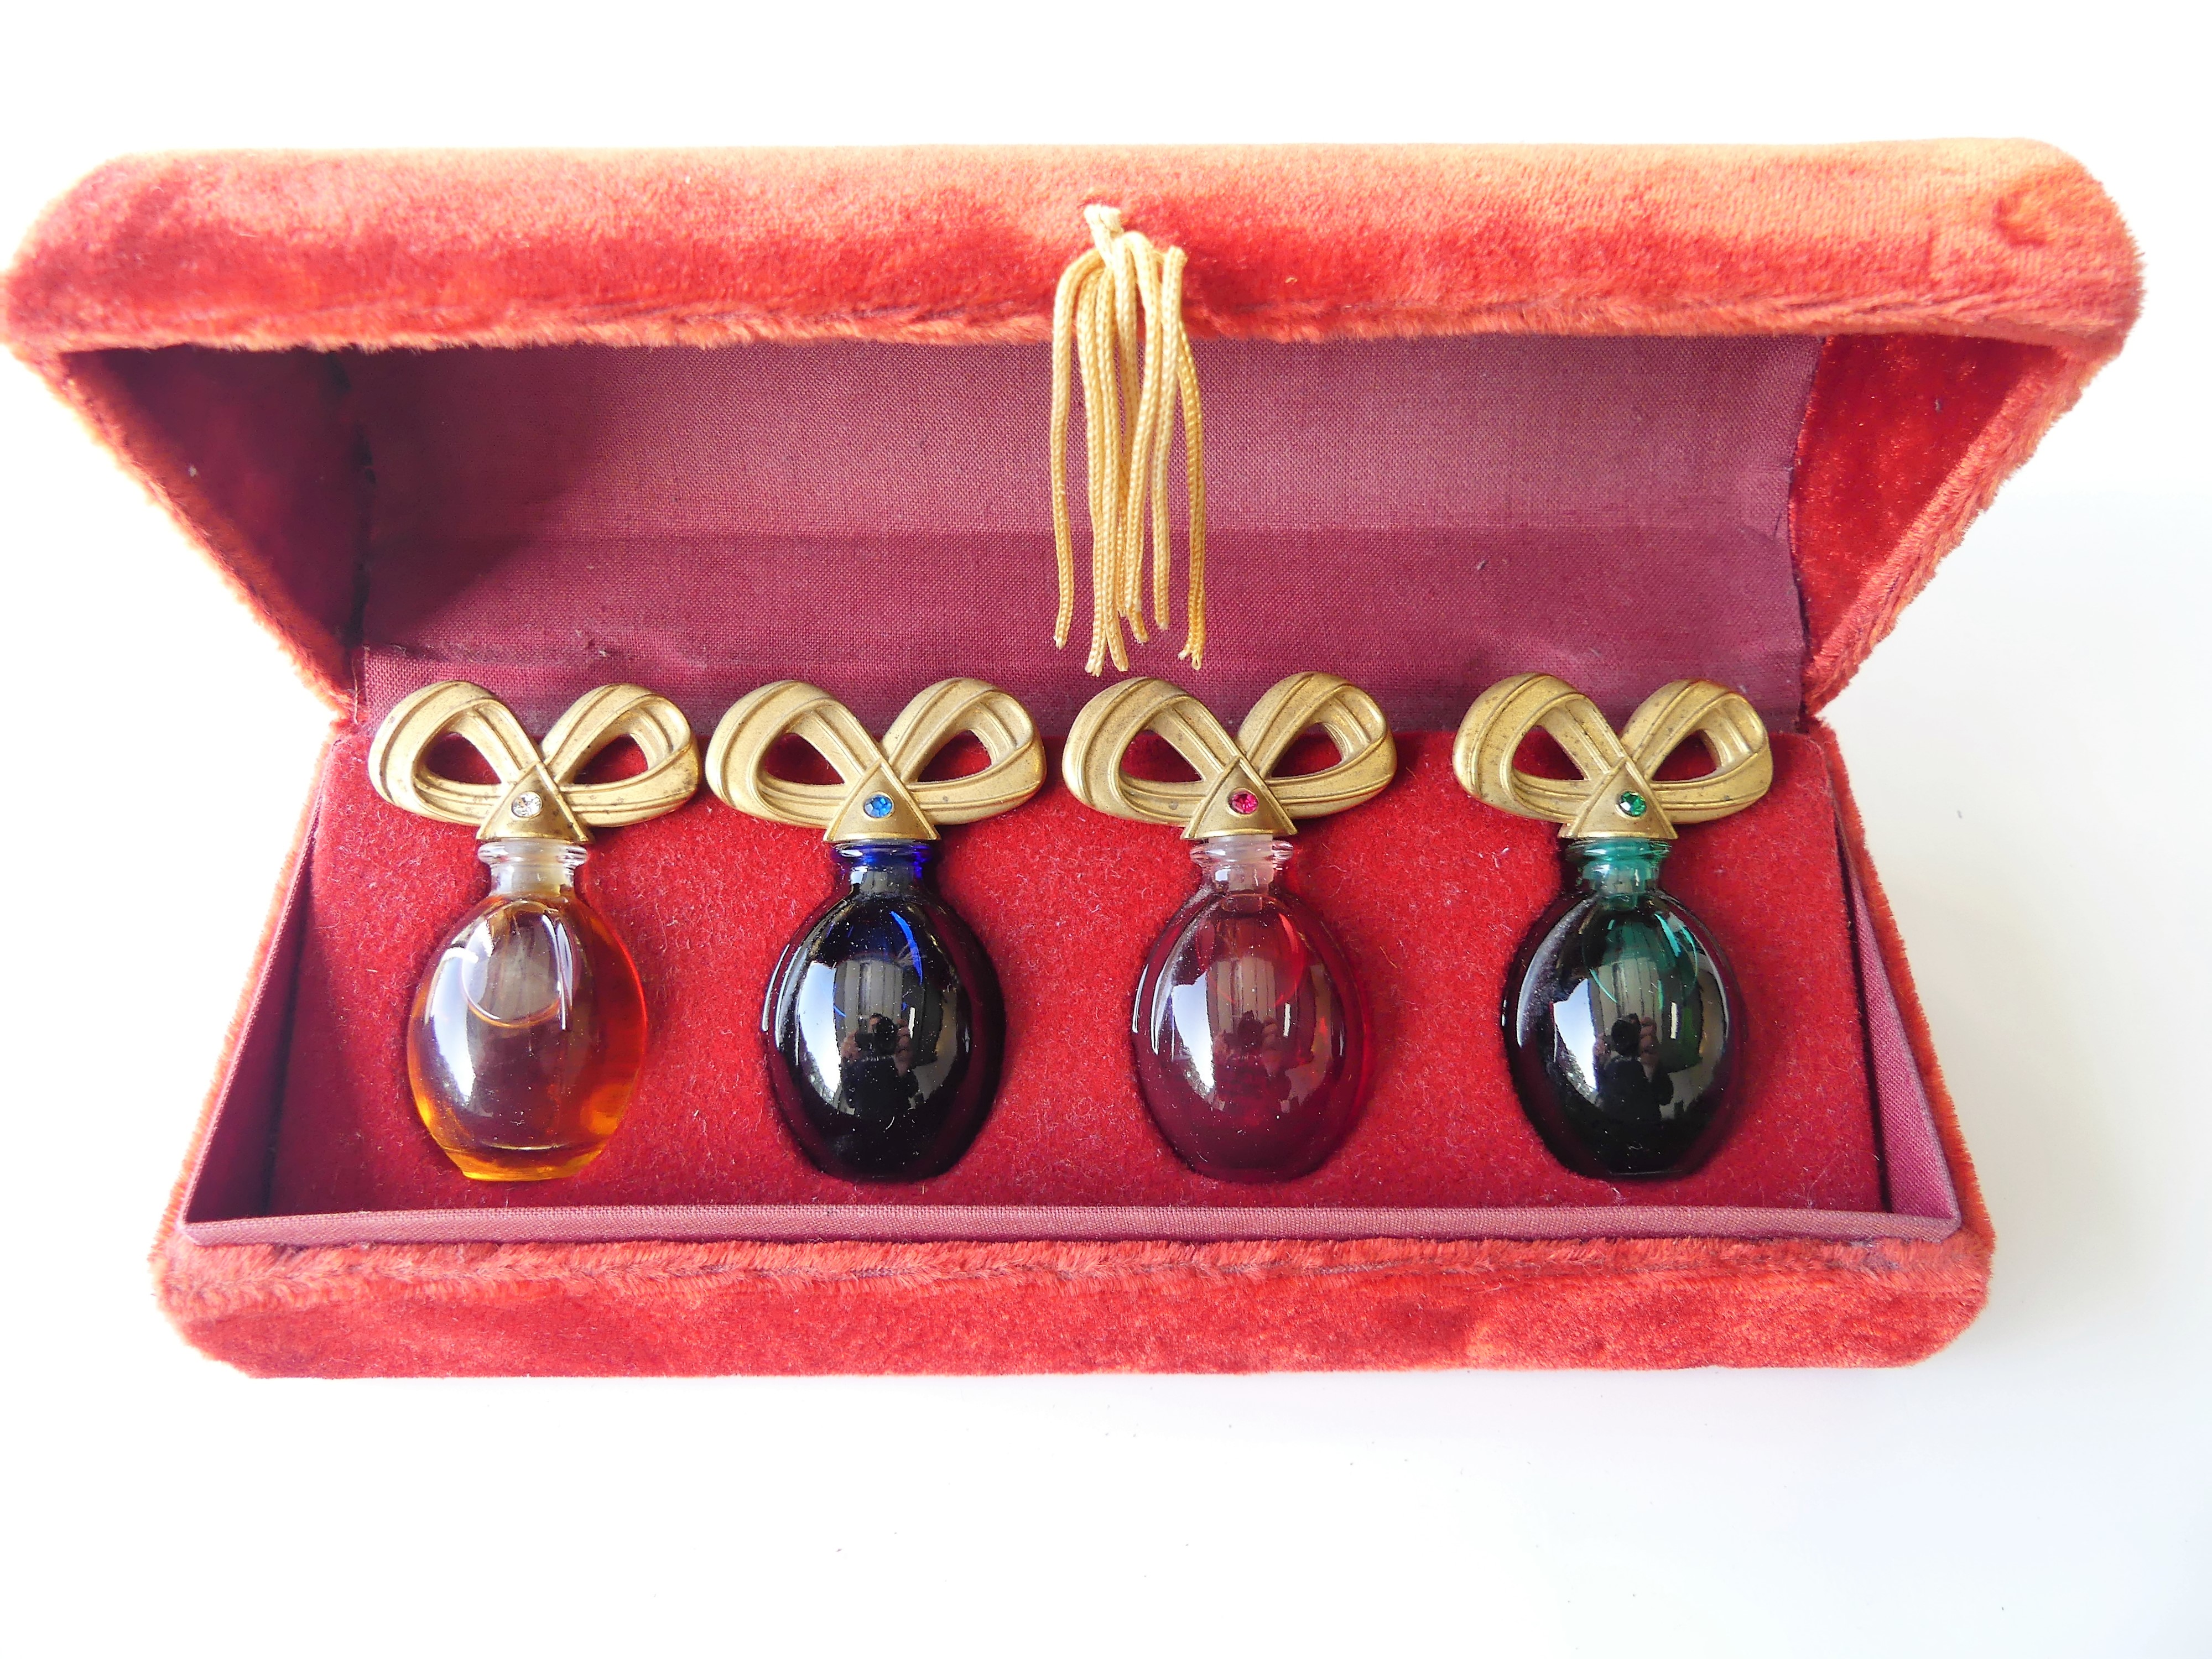 4 Elizabeth Arden Diamonds mini parfums in fluwelen box